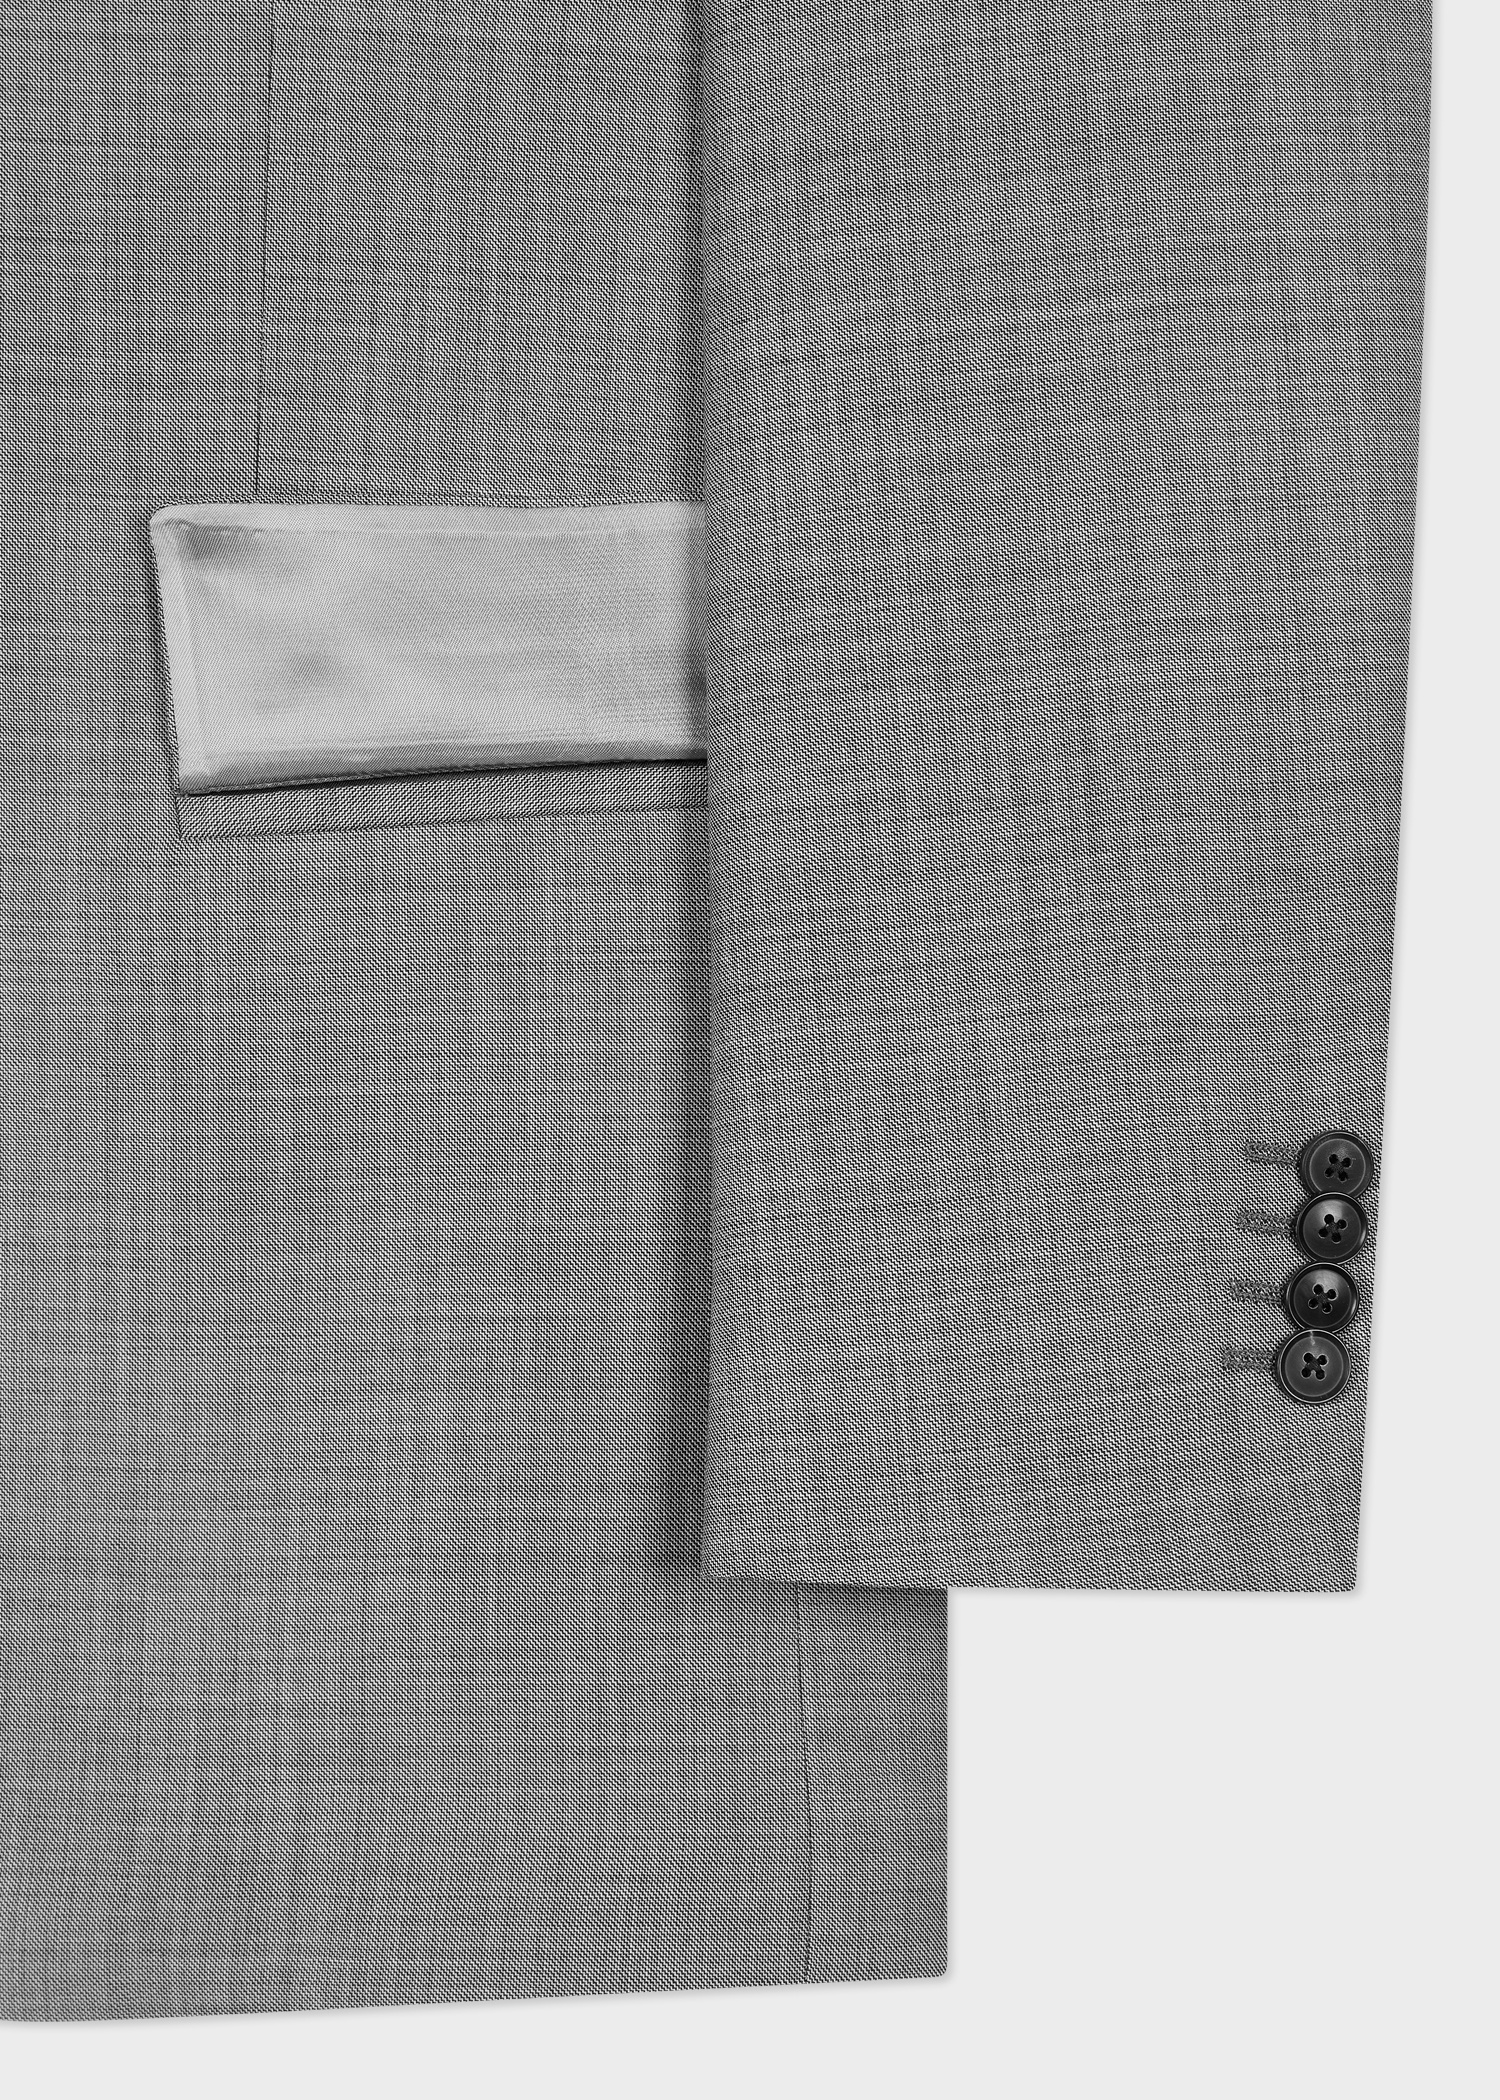 The Brierley - Light Grey Sharkskin Wool Suit - 5